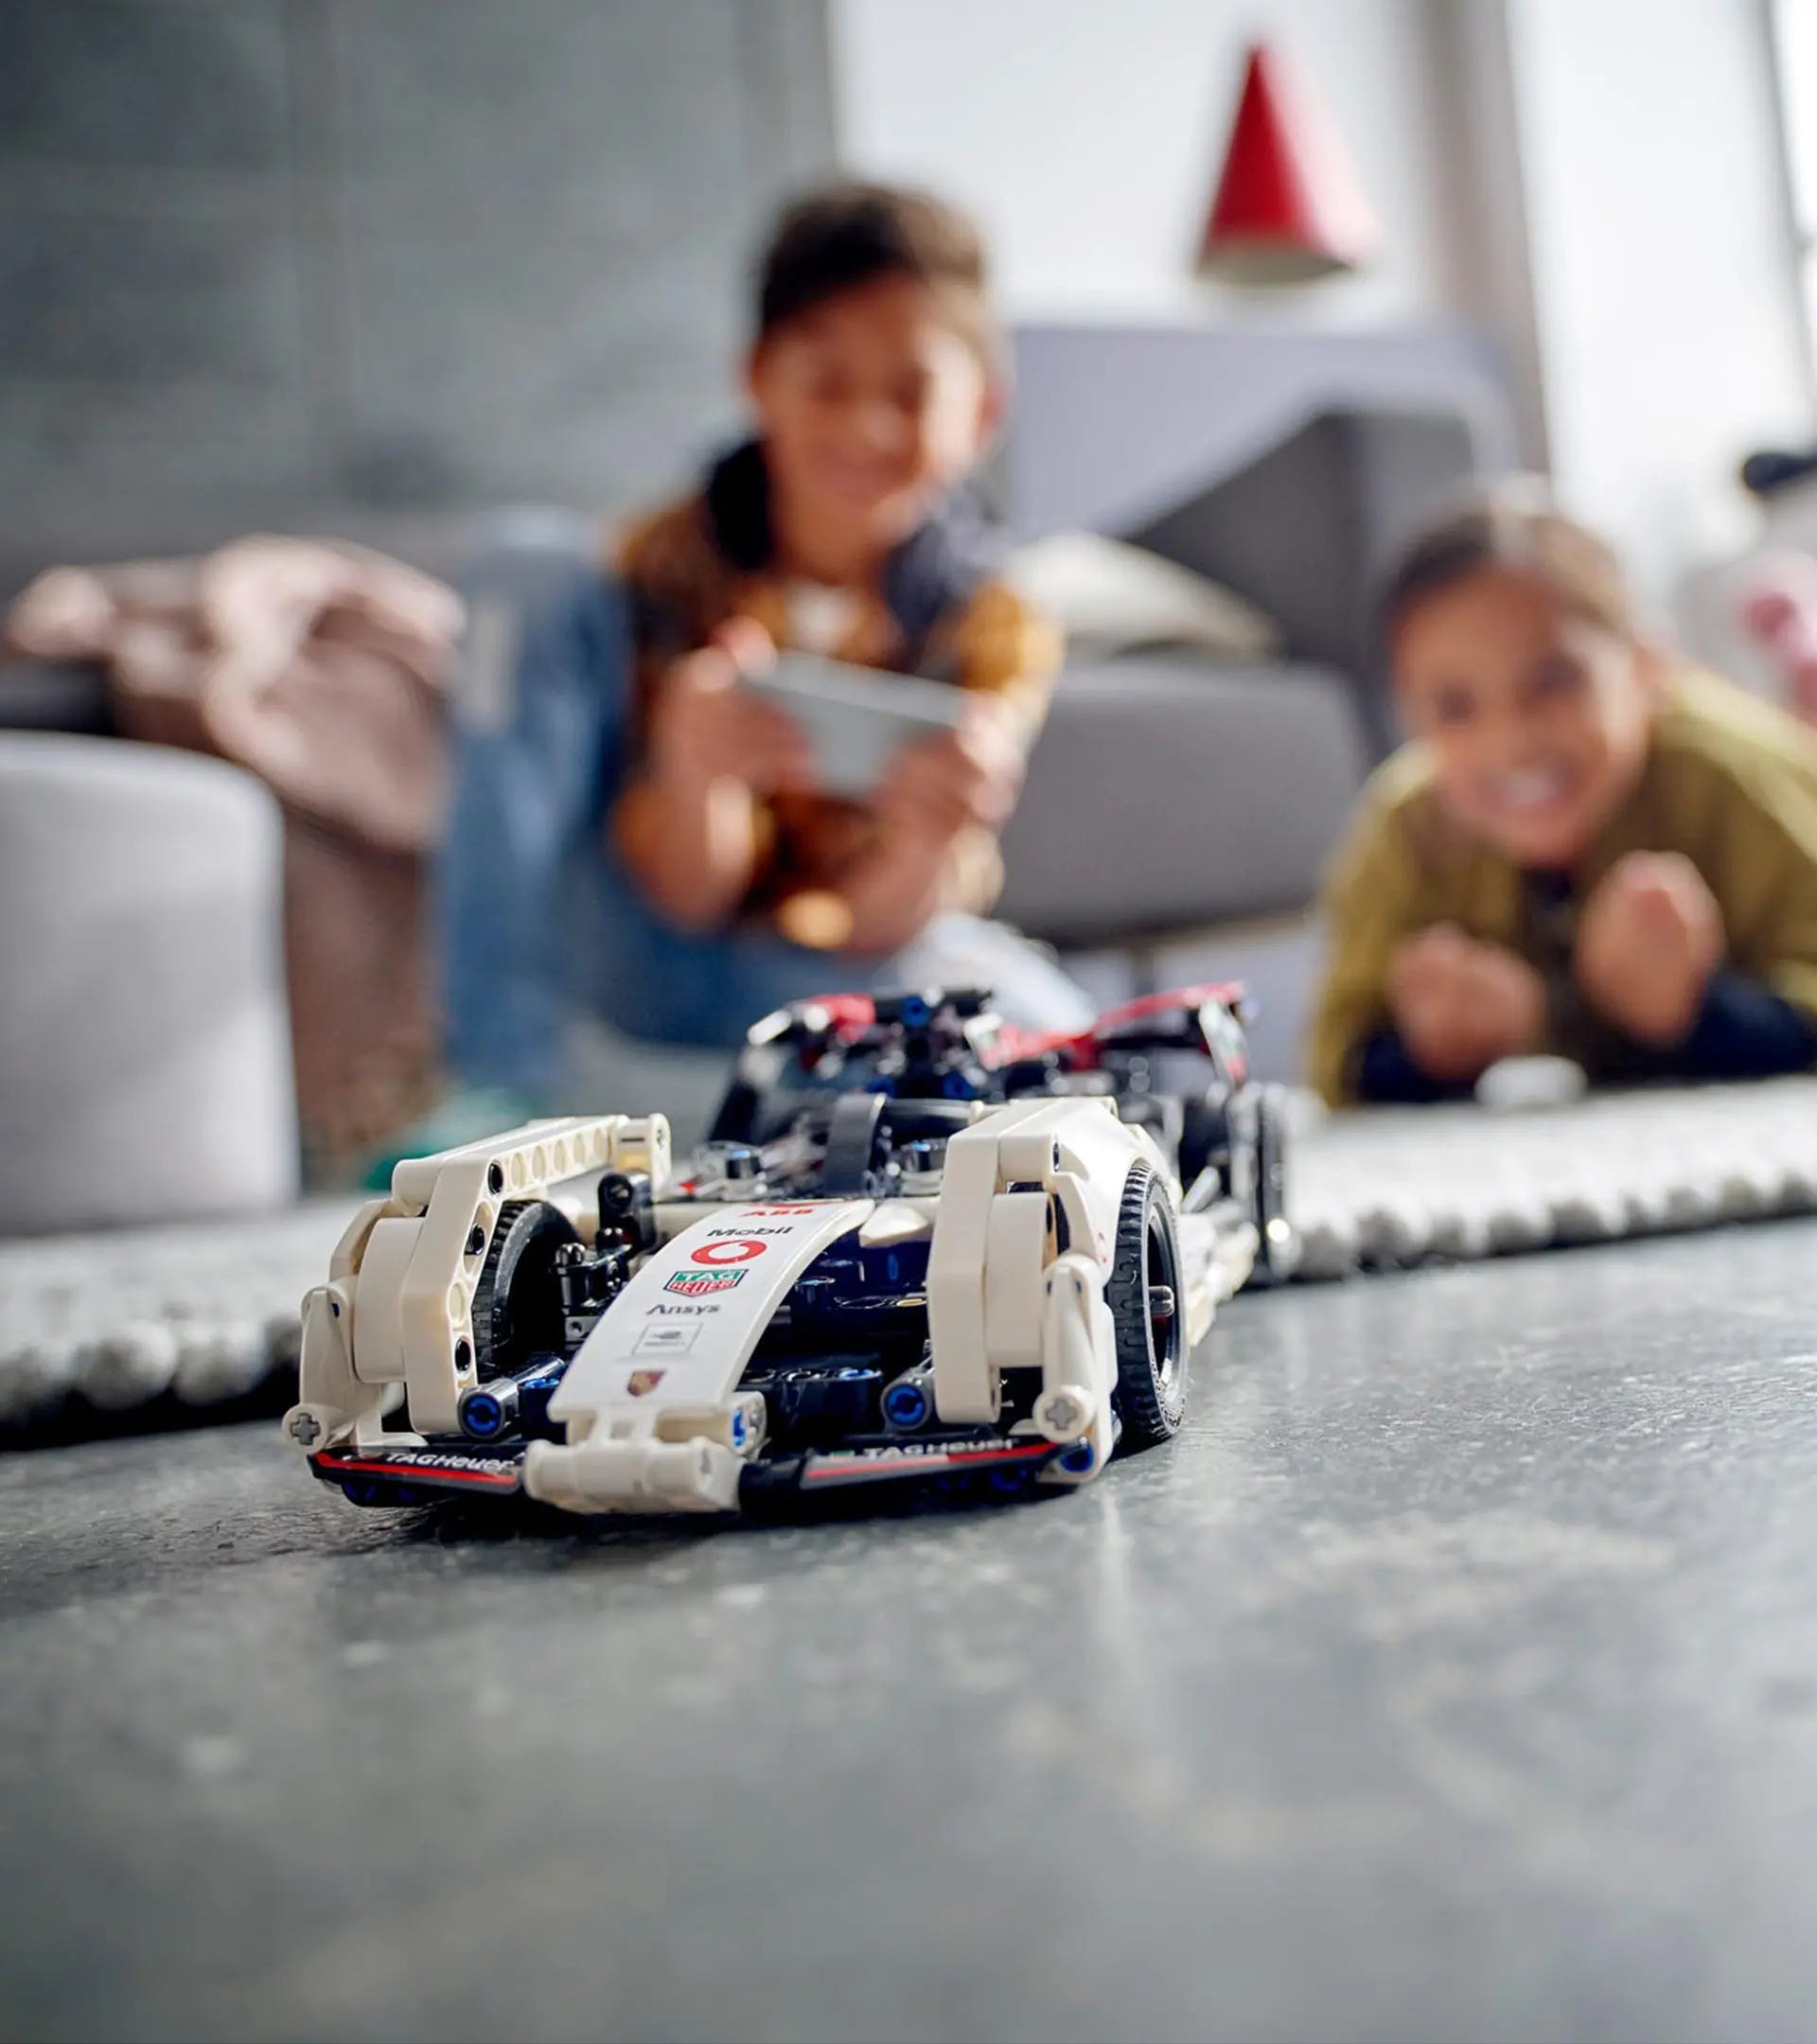 LEGO Porsche on living floor, two children smiling in background